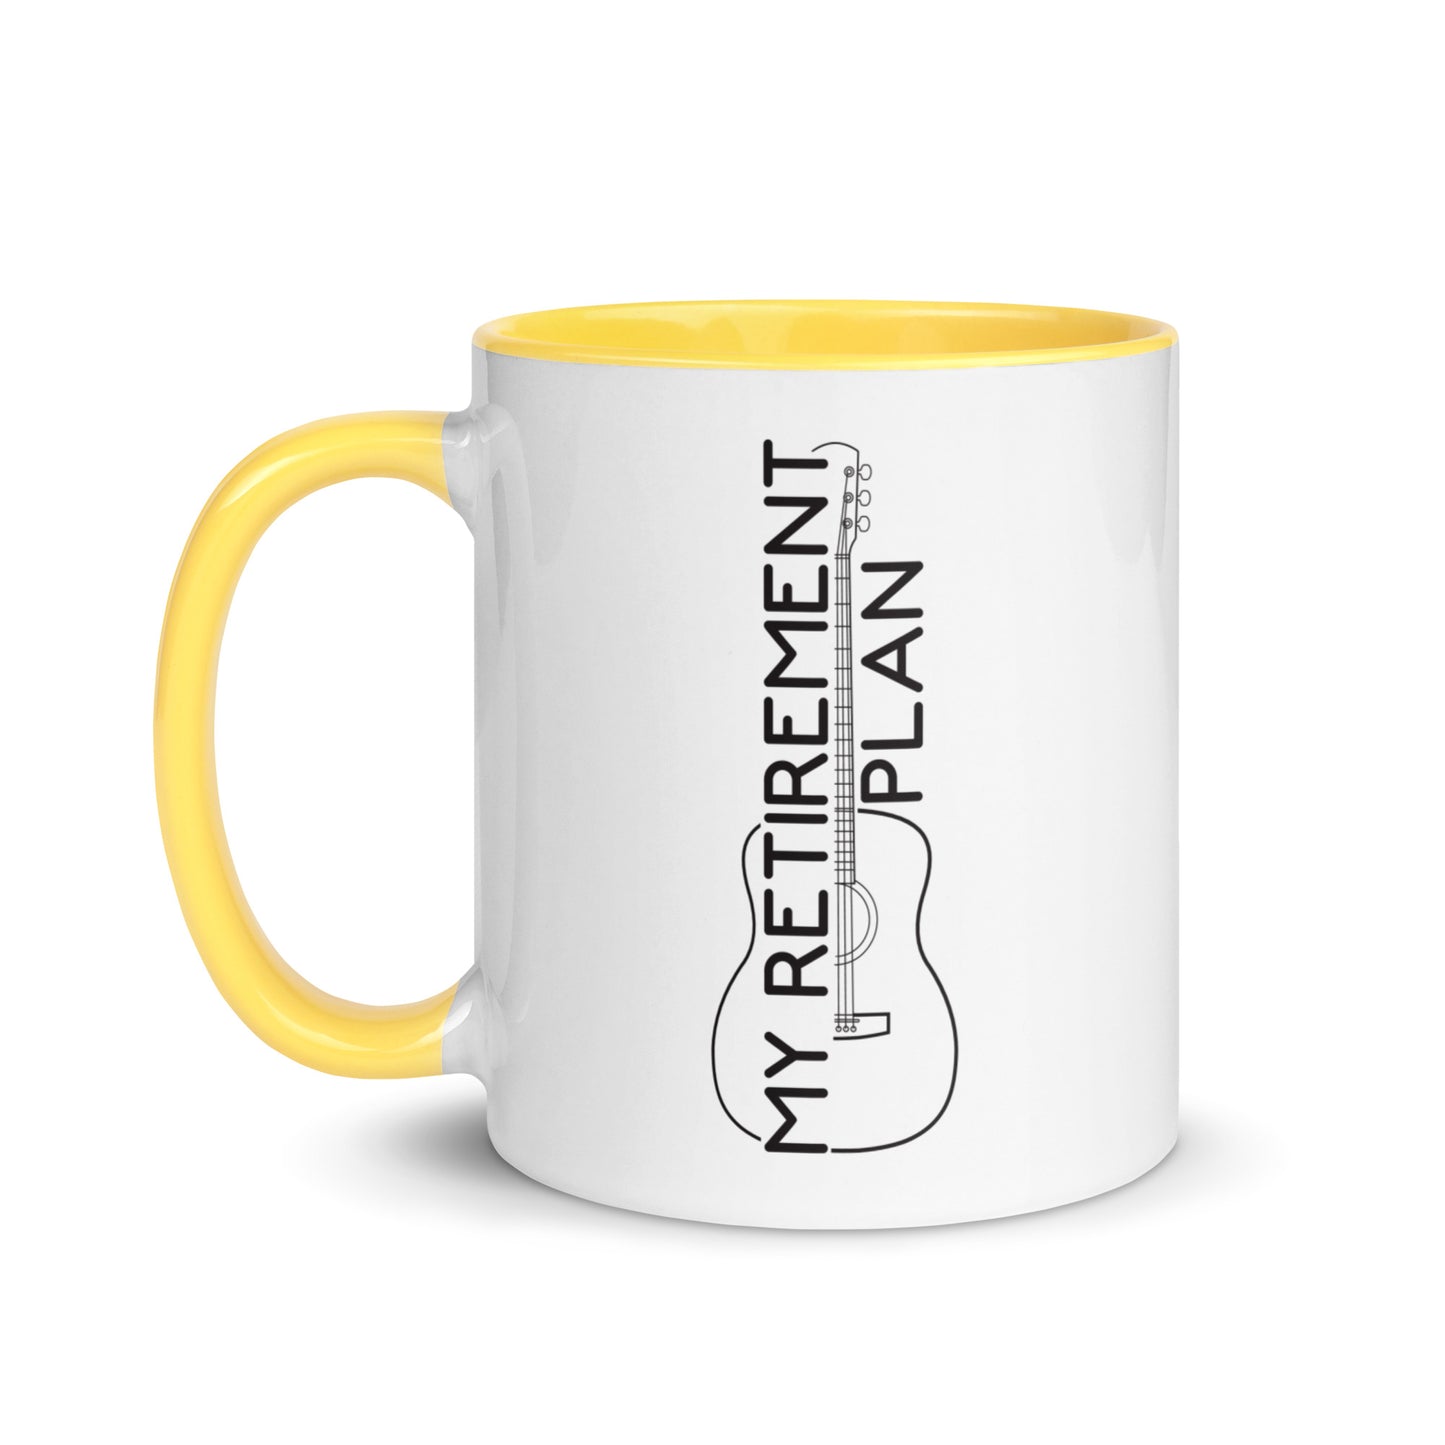 Retirement Plan - Mug with Color Inside